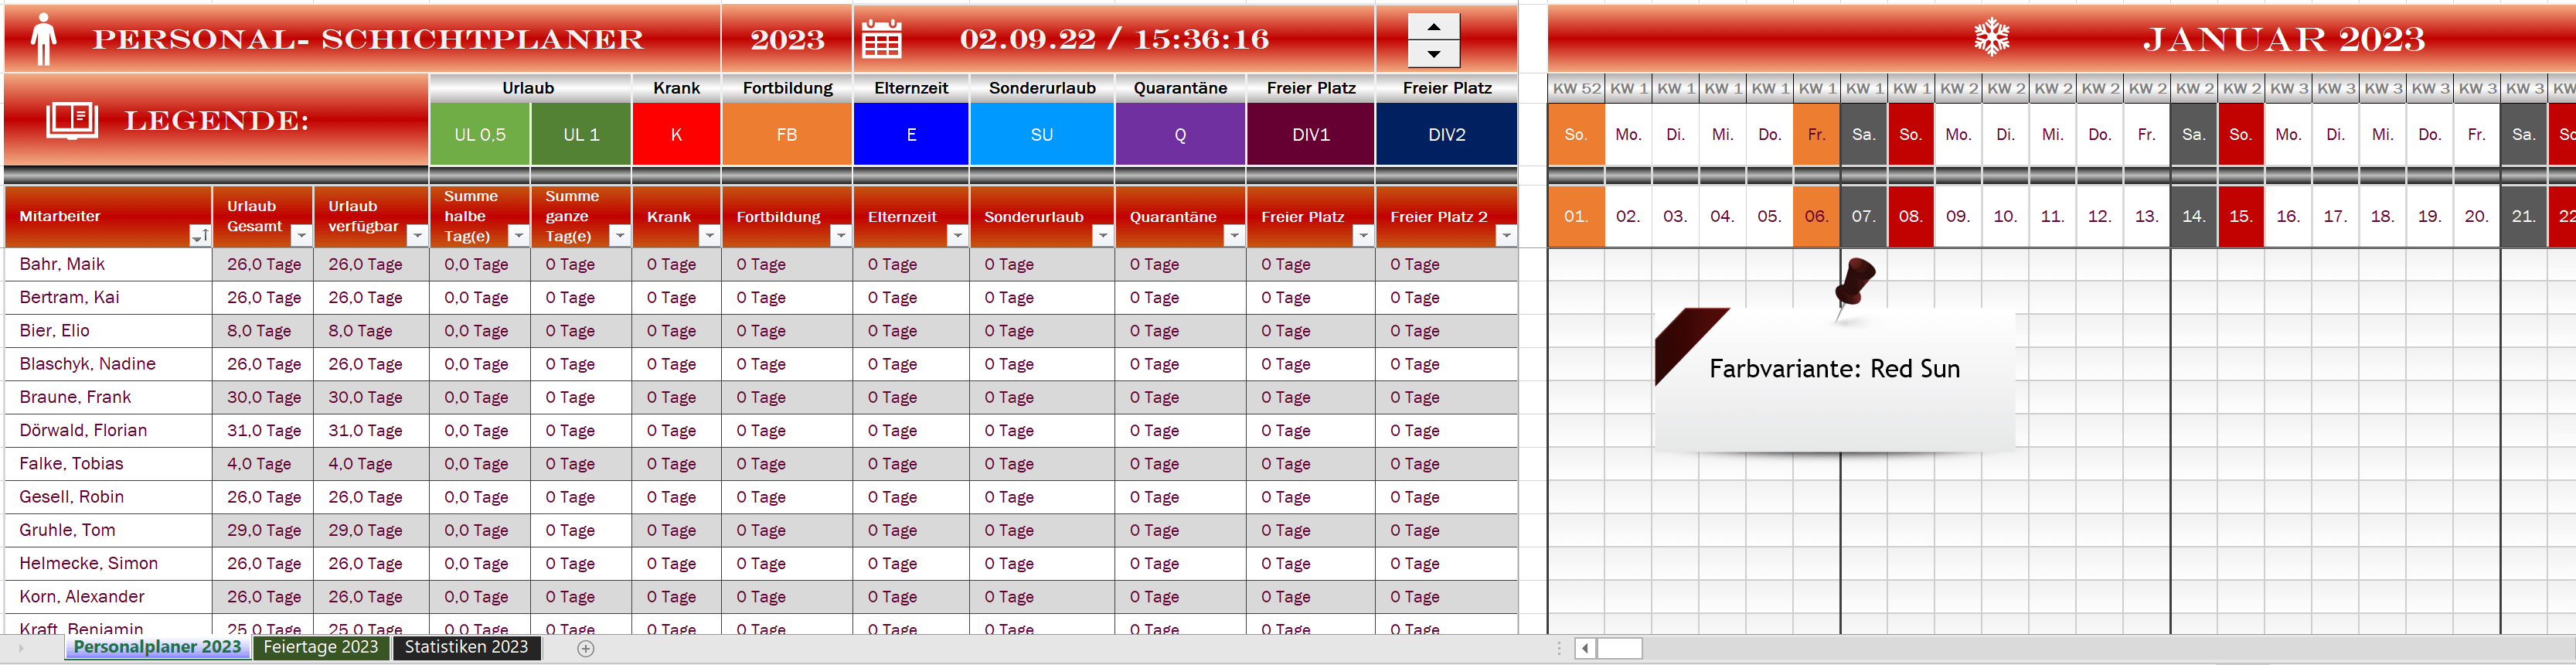 Excel Personalplaner 2023-Variante-Red Sun